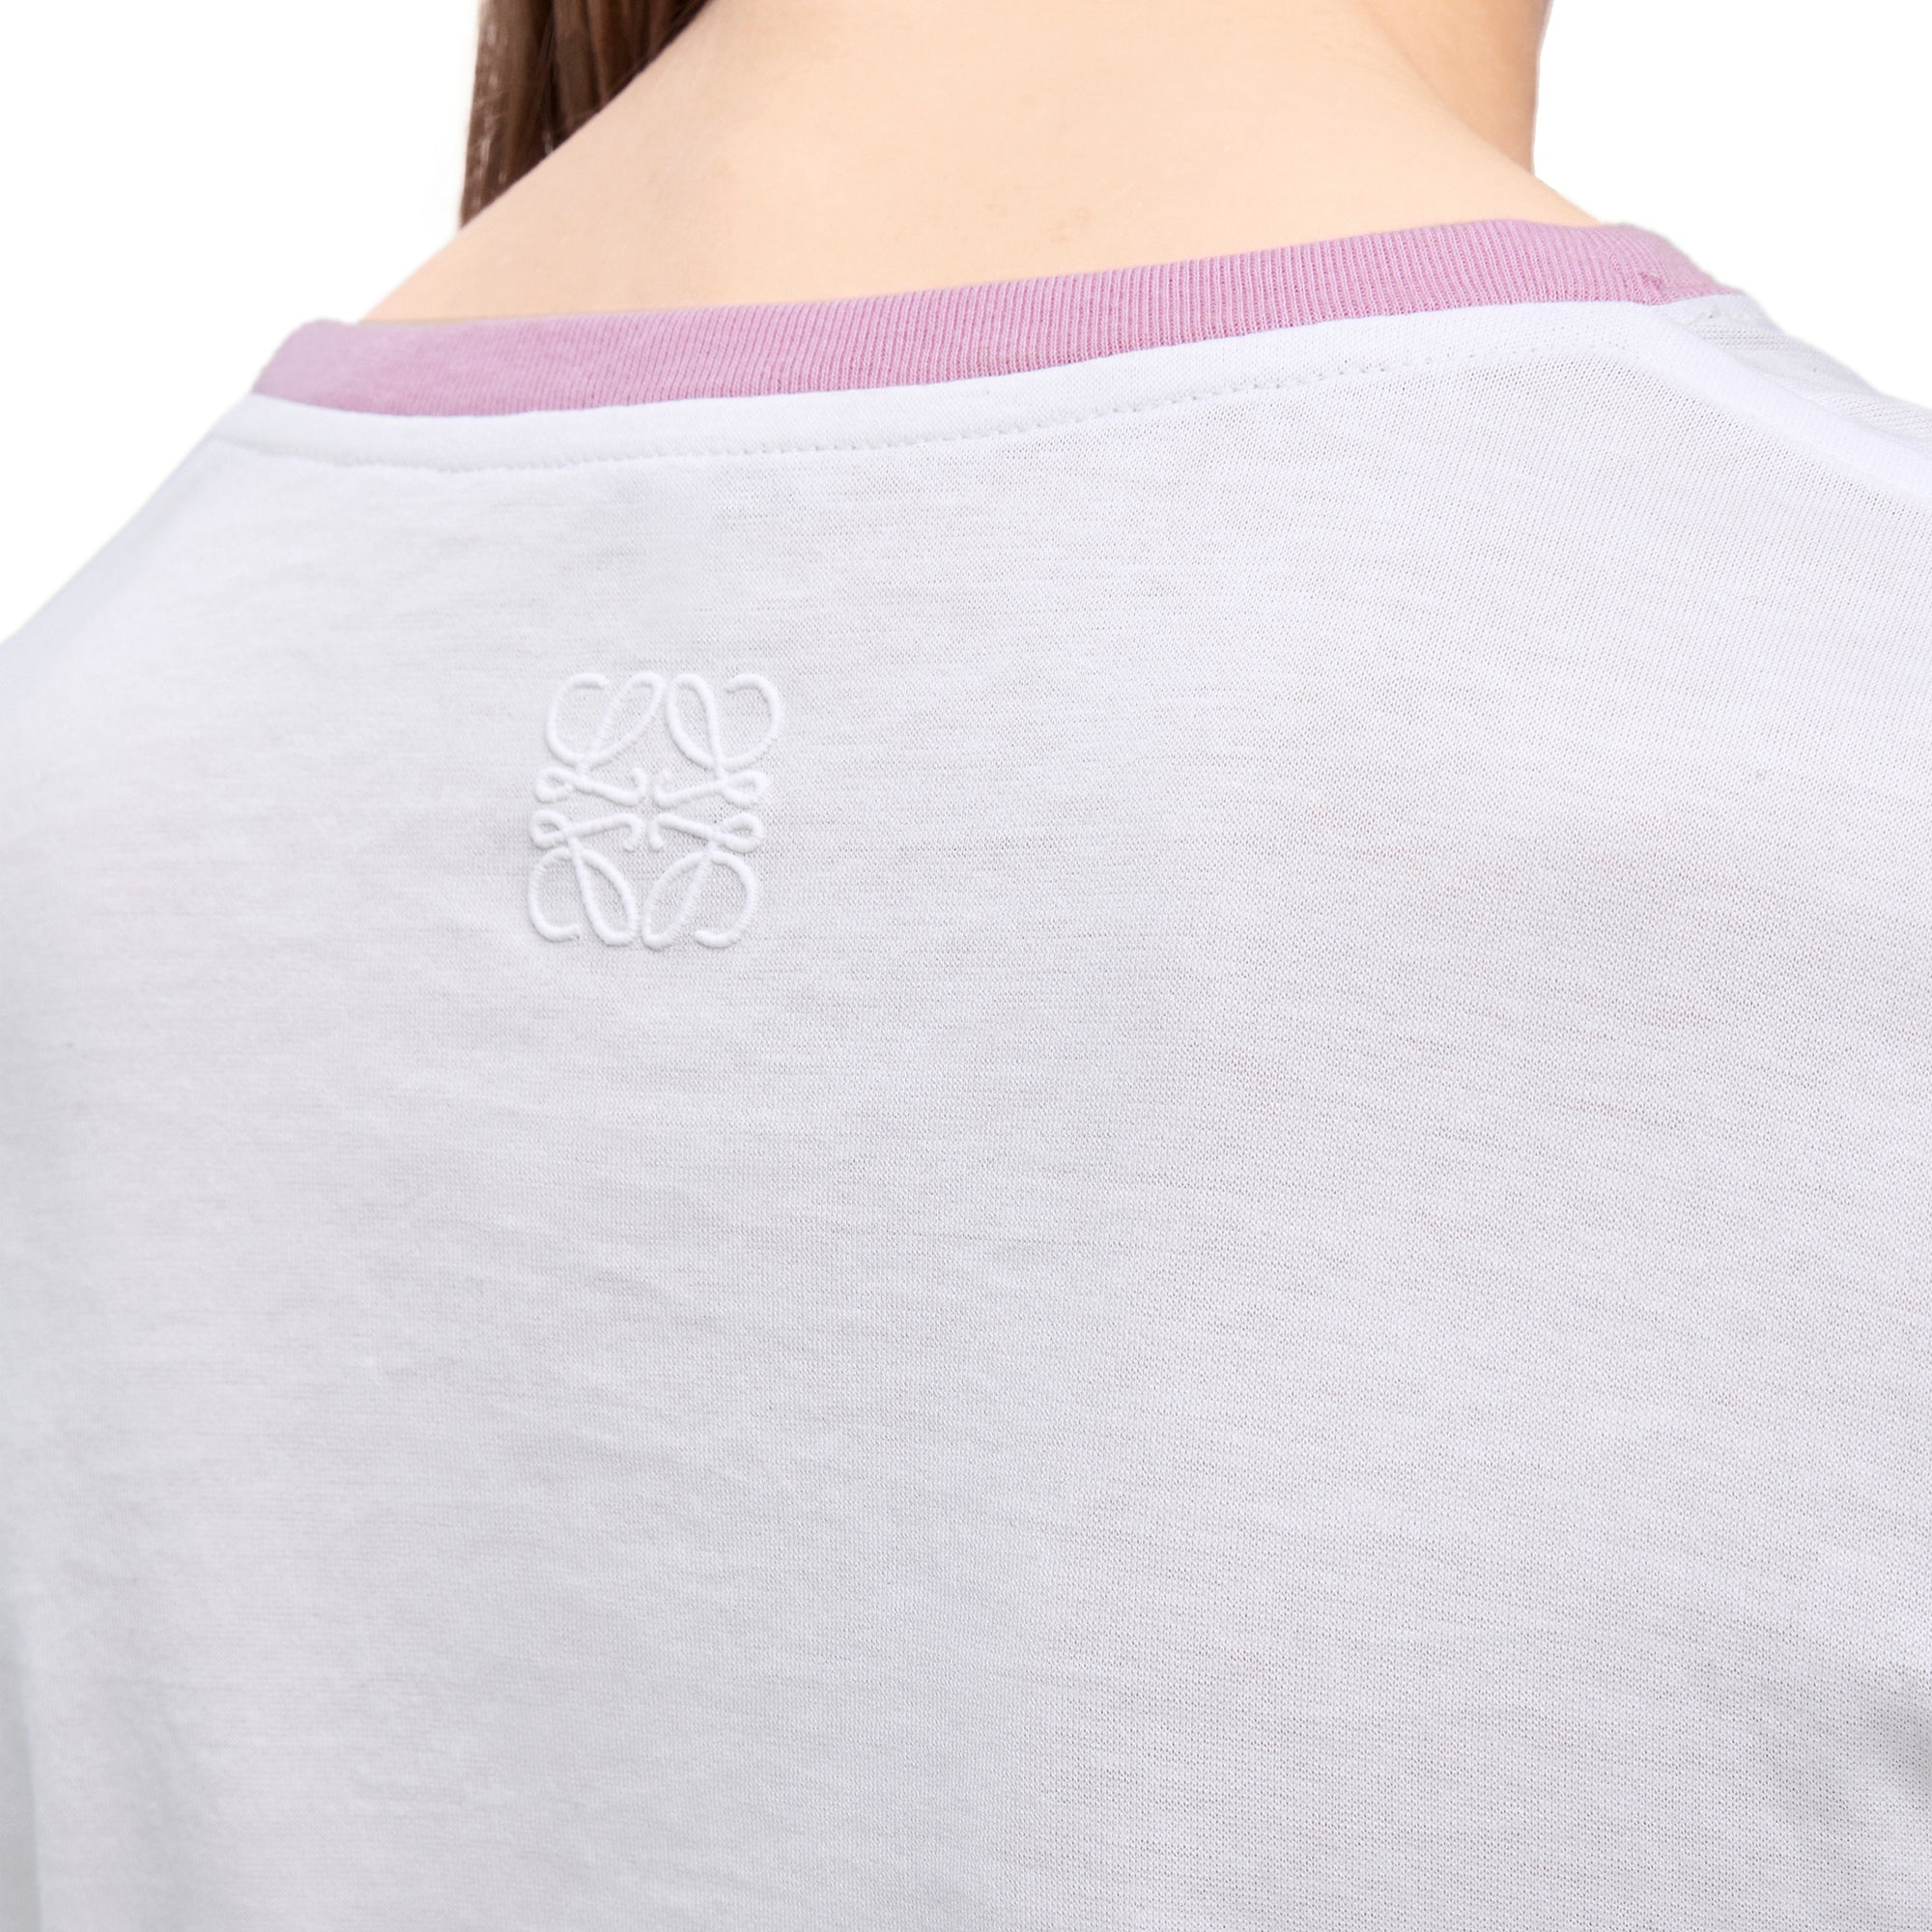 Loewe - Women’s Slim Fit T-Shirt - (White/Multicolour) view 5